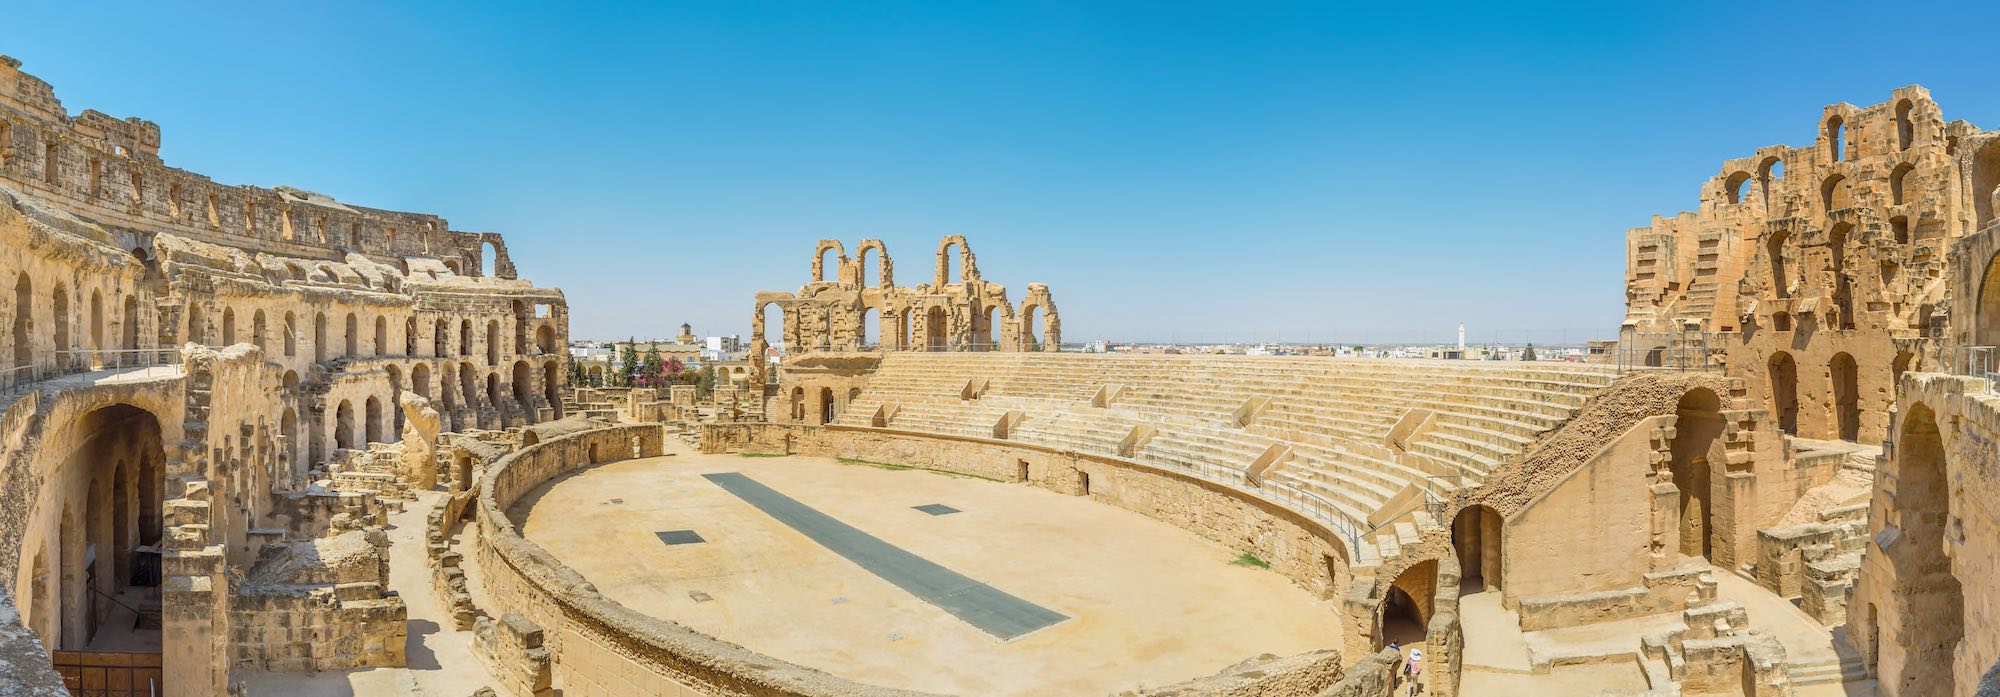 Tunis Amphitheater von El Djem Copyright © AdobeStock 94568464 efesenko